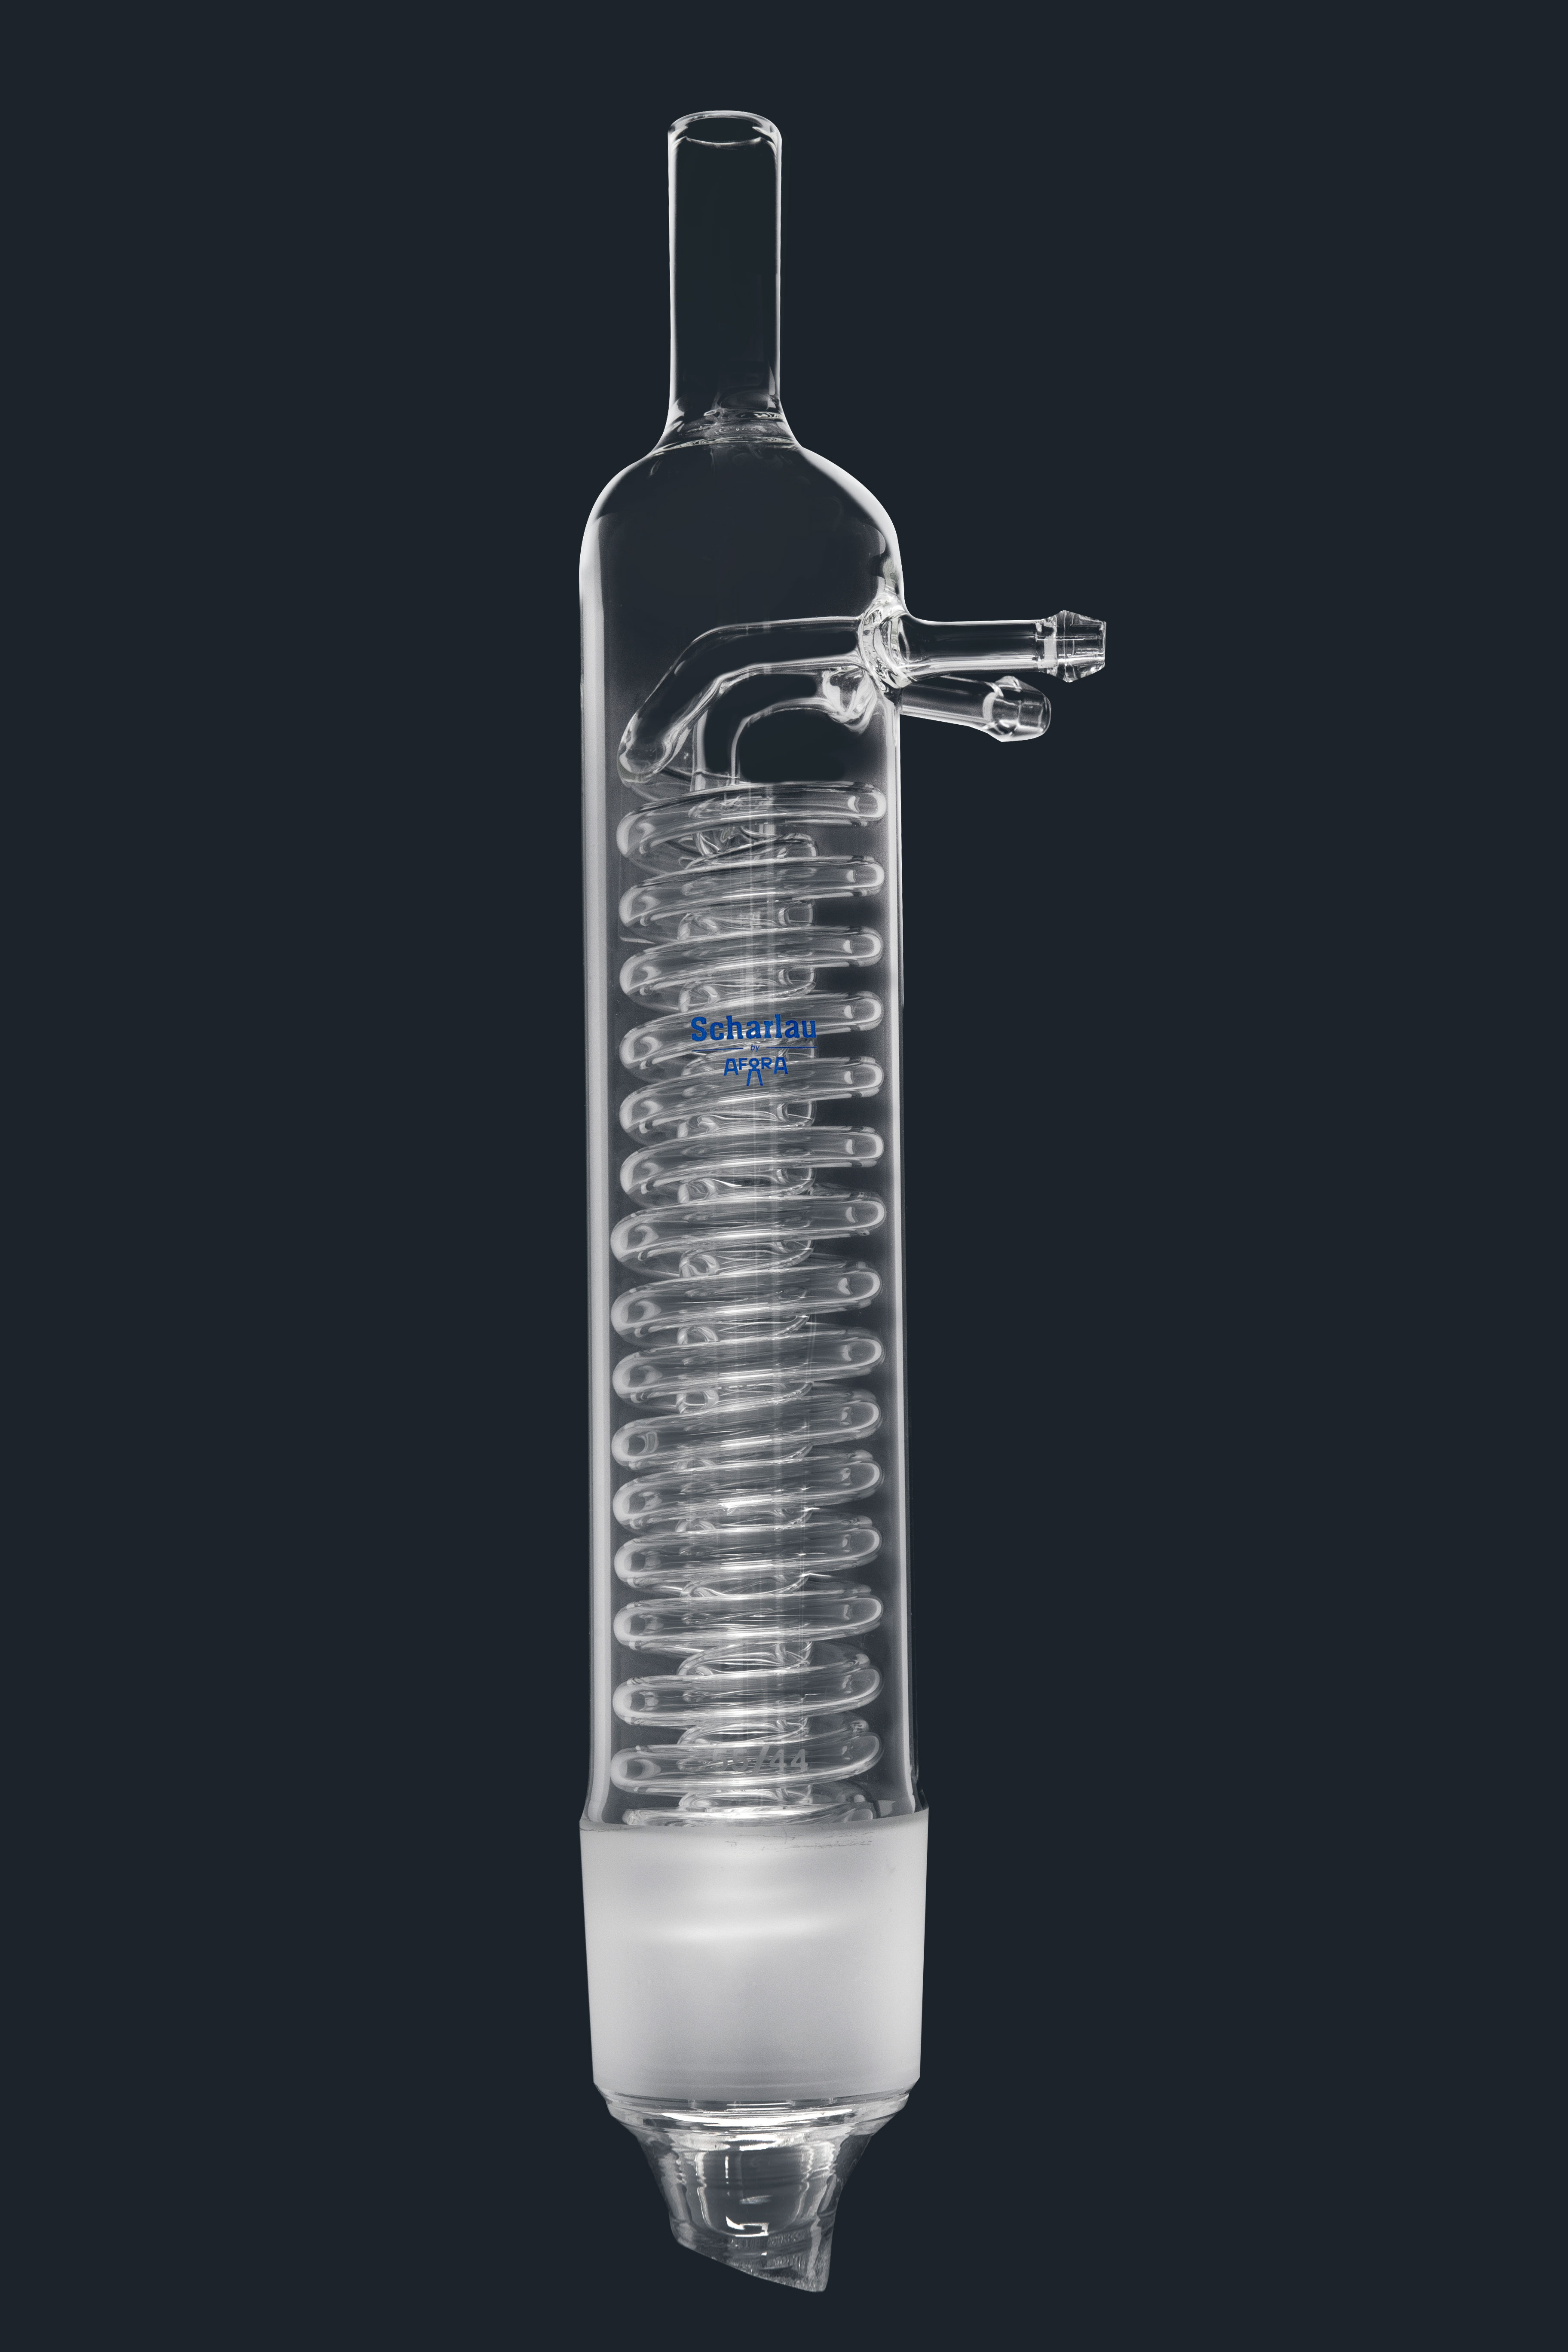 Refrigerante Dimroth para extractor Soxhlet. SCHARLAU. Esmerilados: M-55/44. Longitud útil (mm): 200